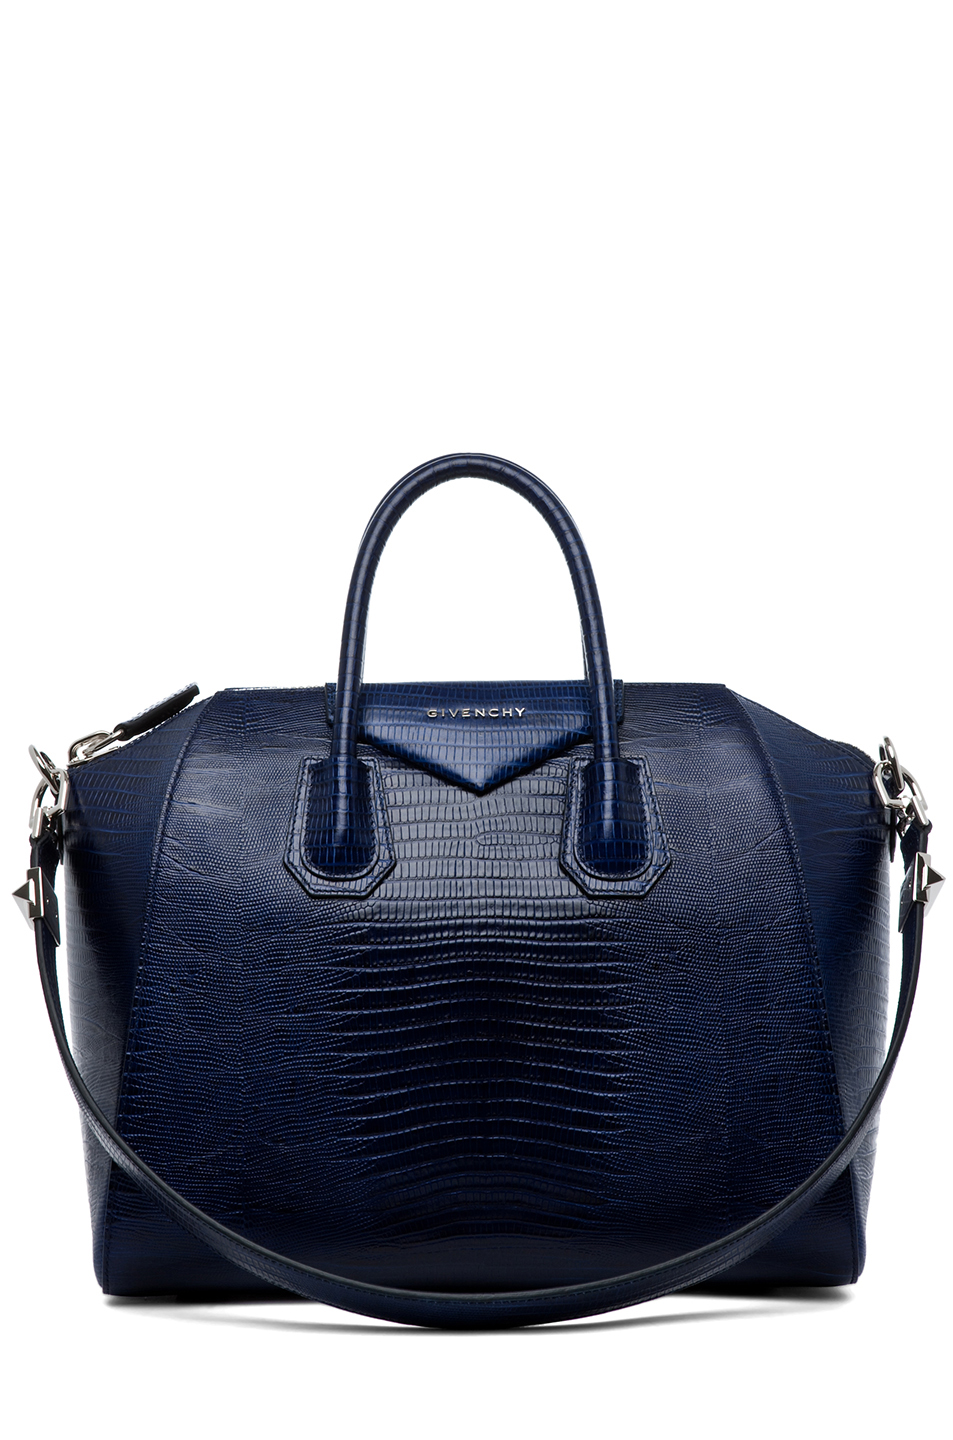 Bag the Look for Less: Givenchy Antigona & Charles Jourdan Aubrey Crocodile Embossed Leather Bag ...